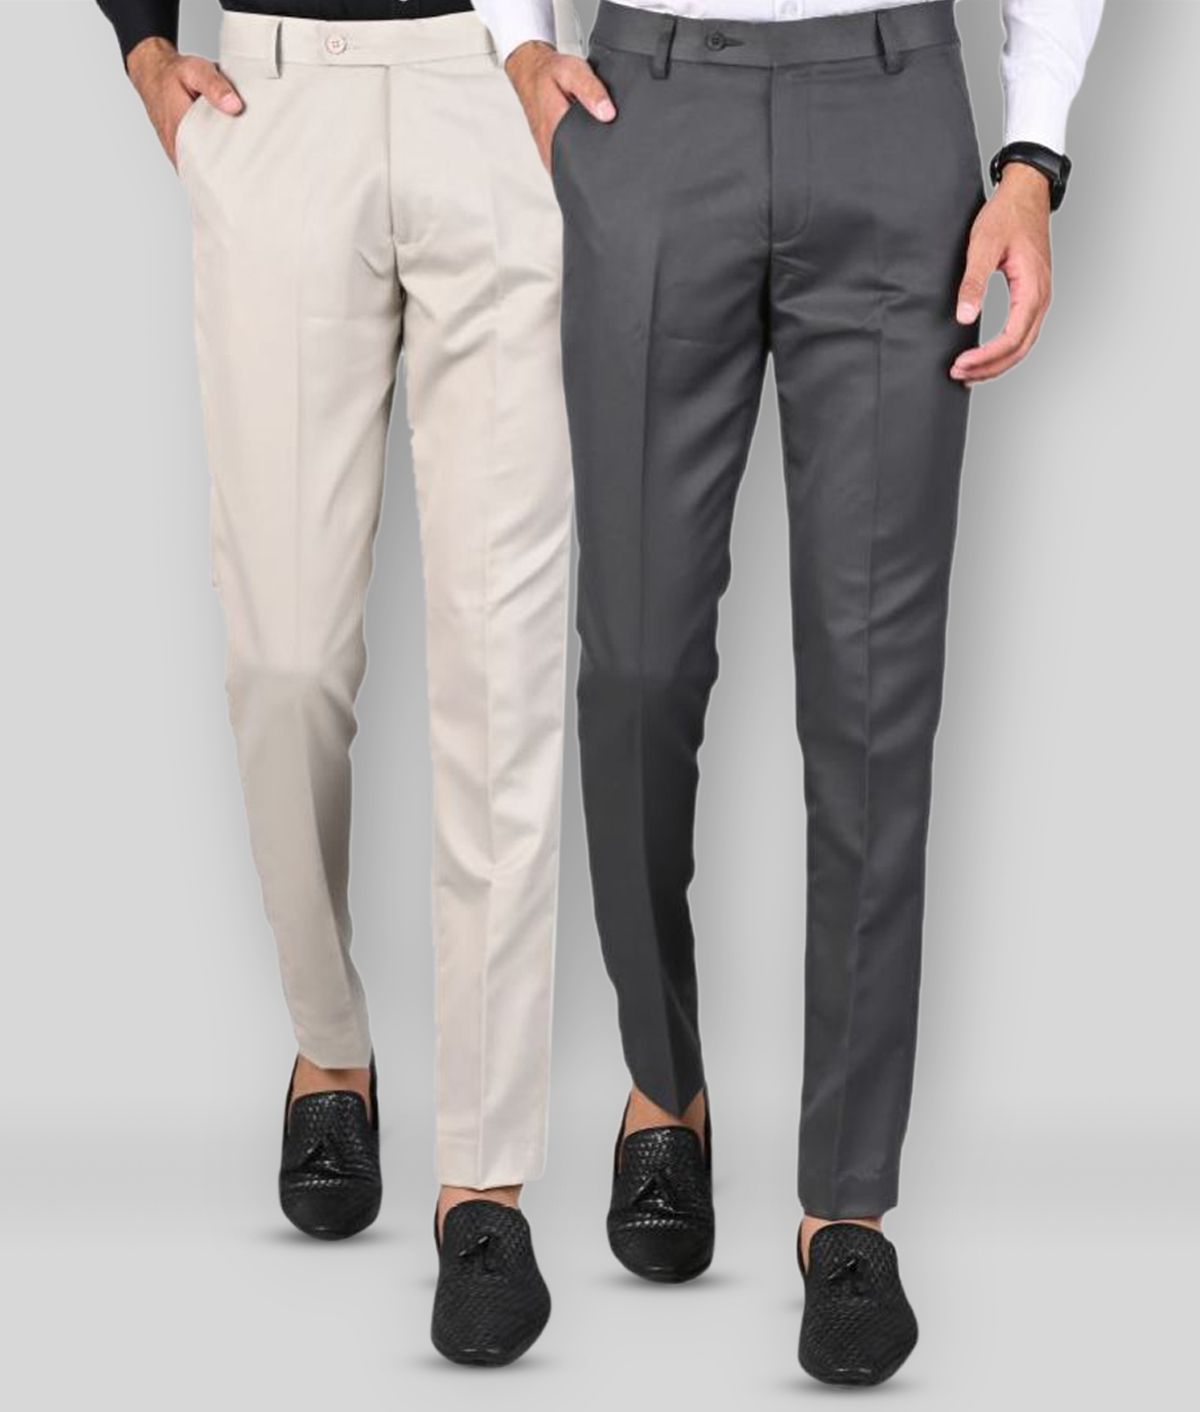     			MANCREW - Beige Polycotton Slim - Fit Men's Formal Pants ( Pack of 2 )